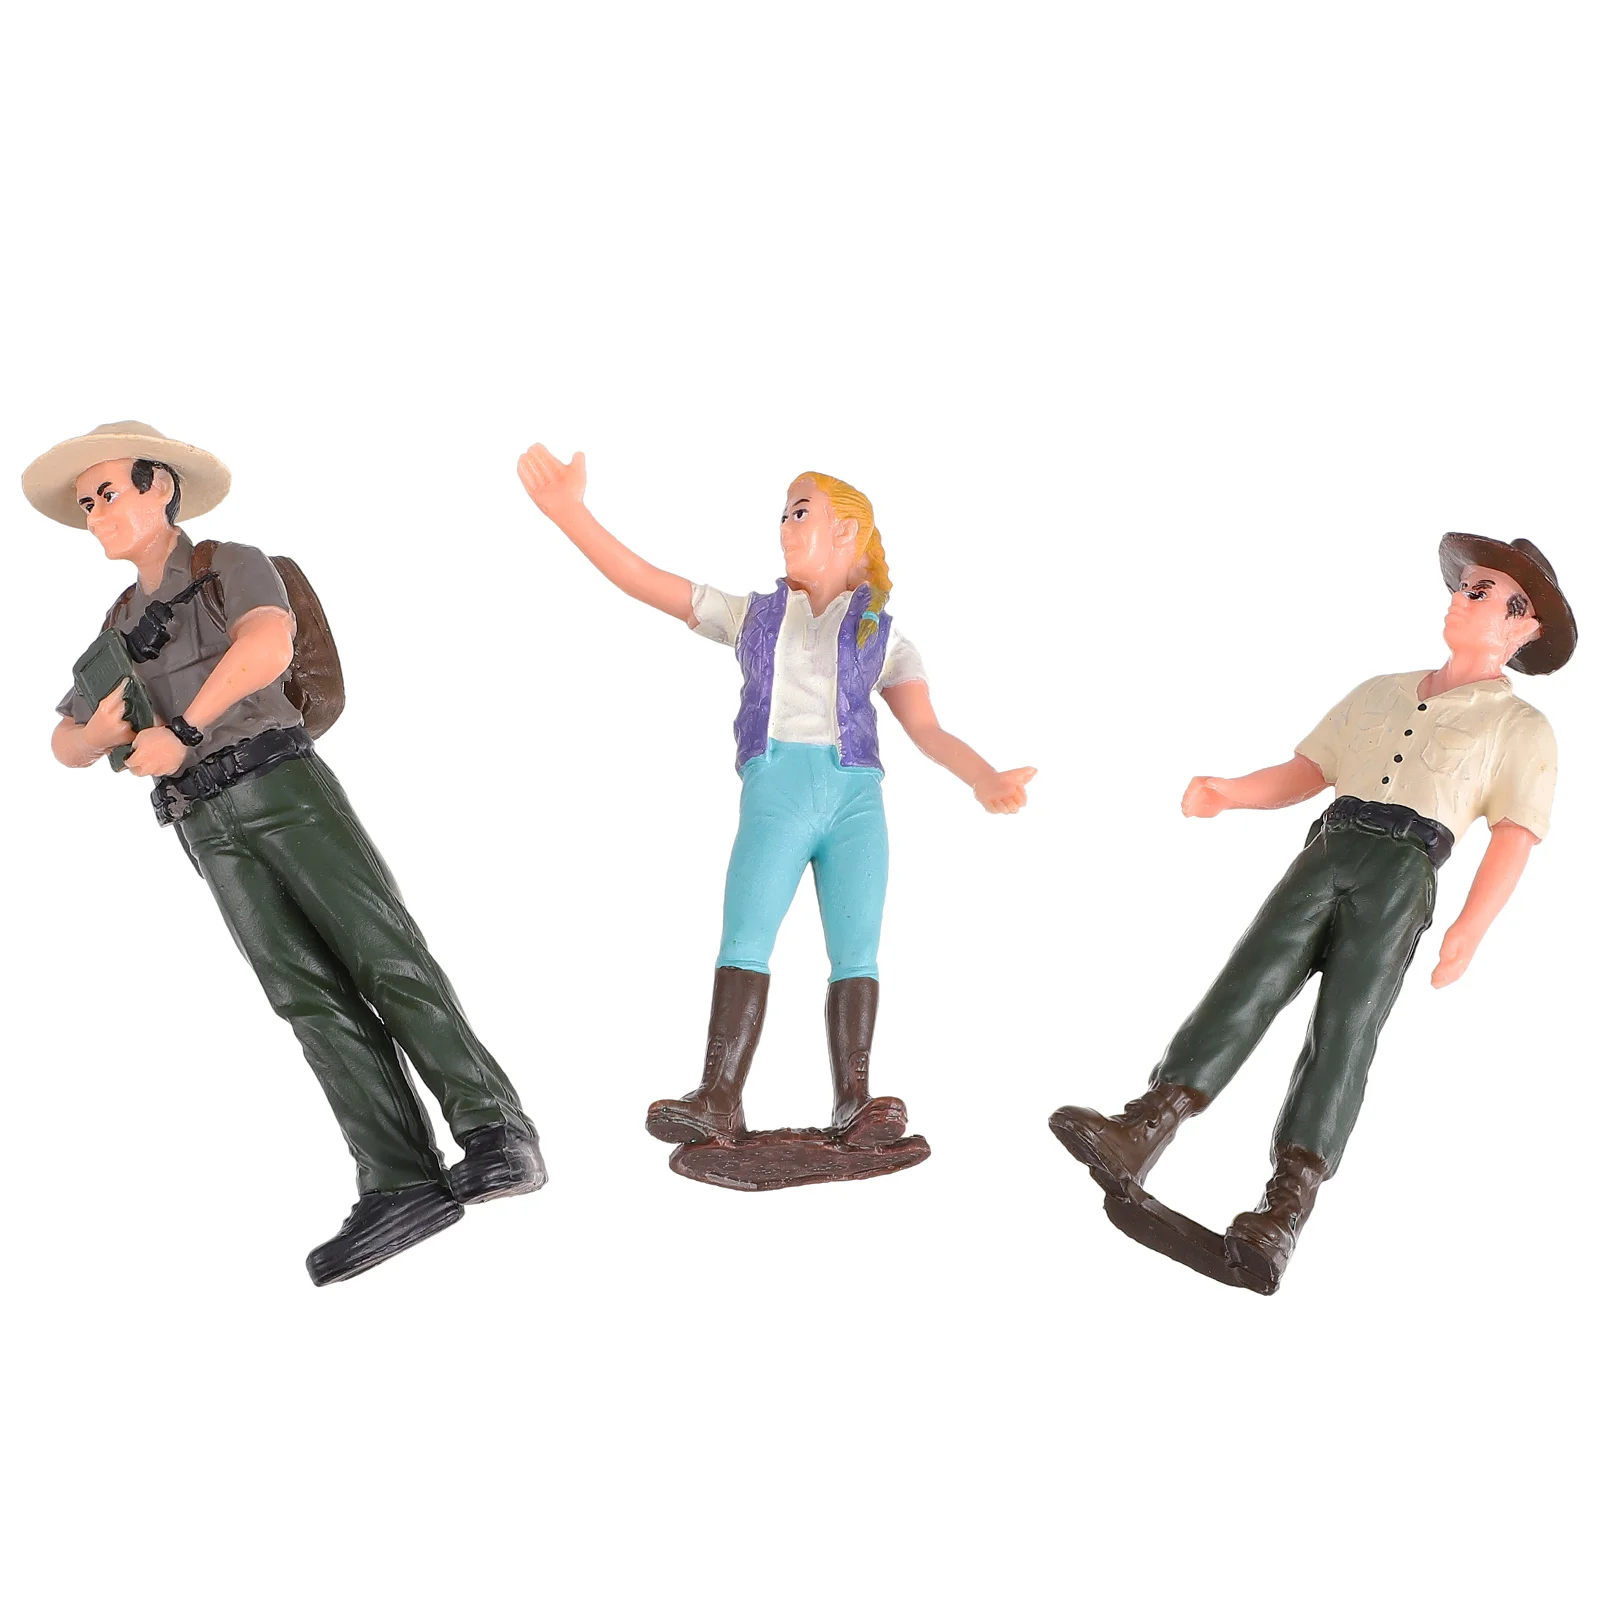 

3pcs Farmer People Figures Realistic Farmer Figurines Farming Man Model Farm Playset for Kids Toldders Accessories